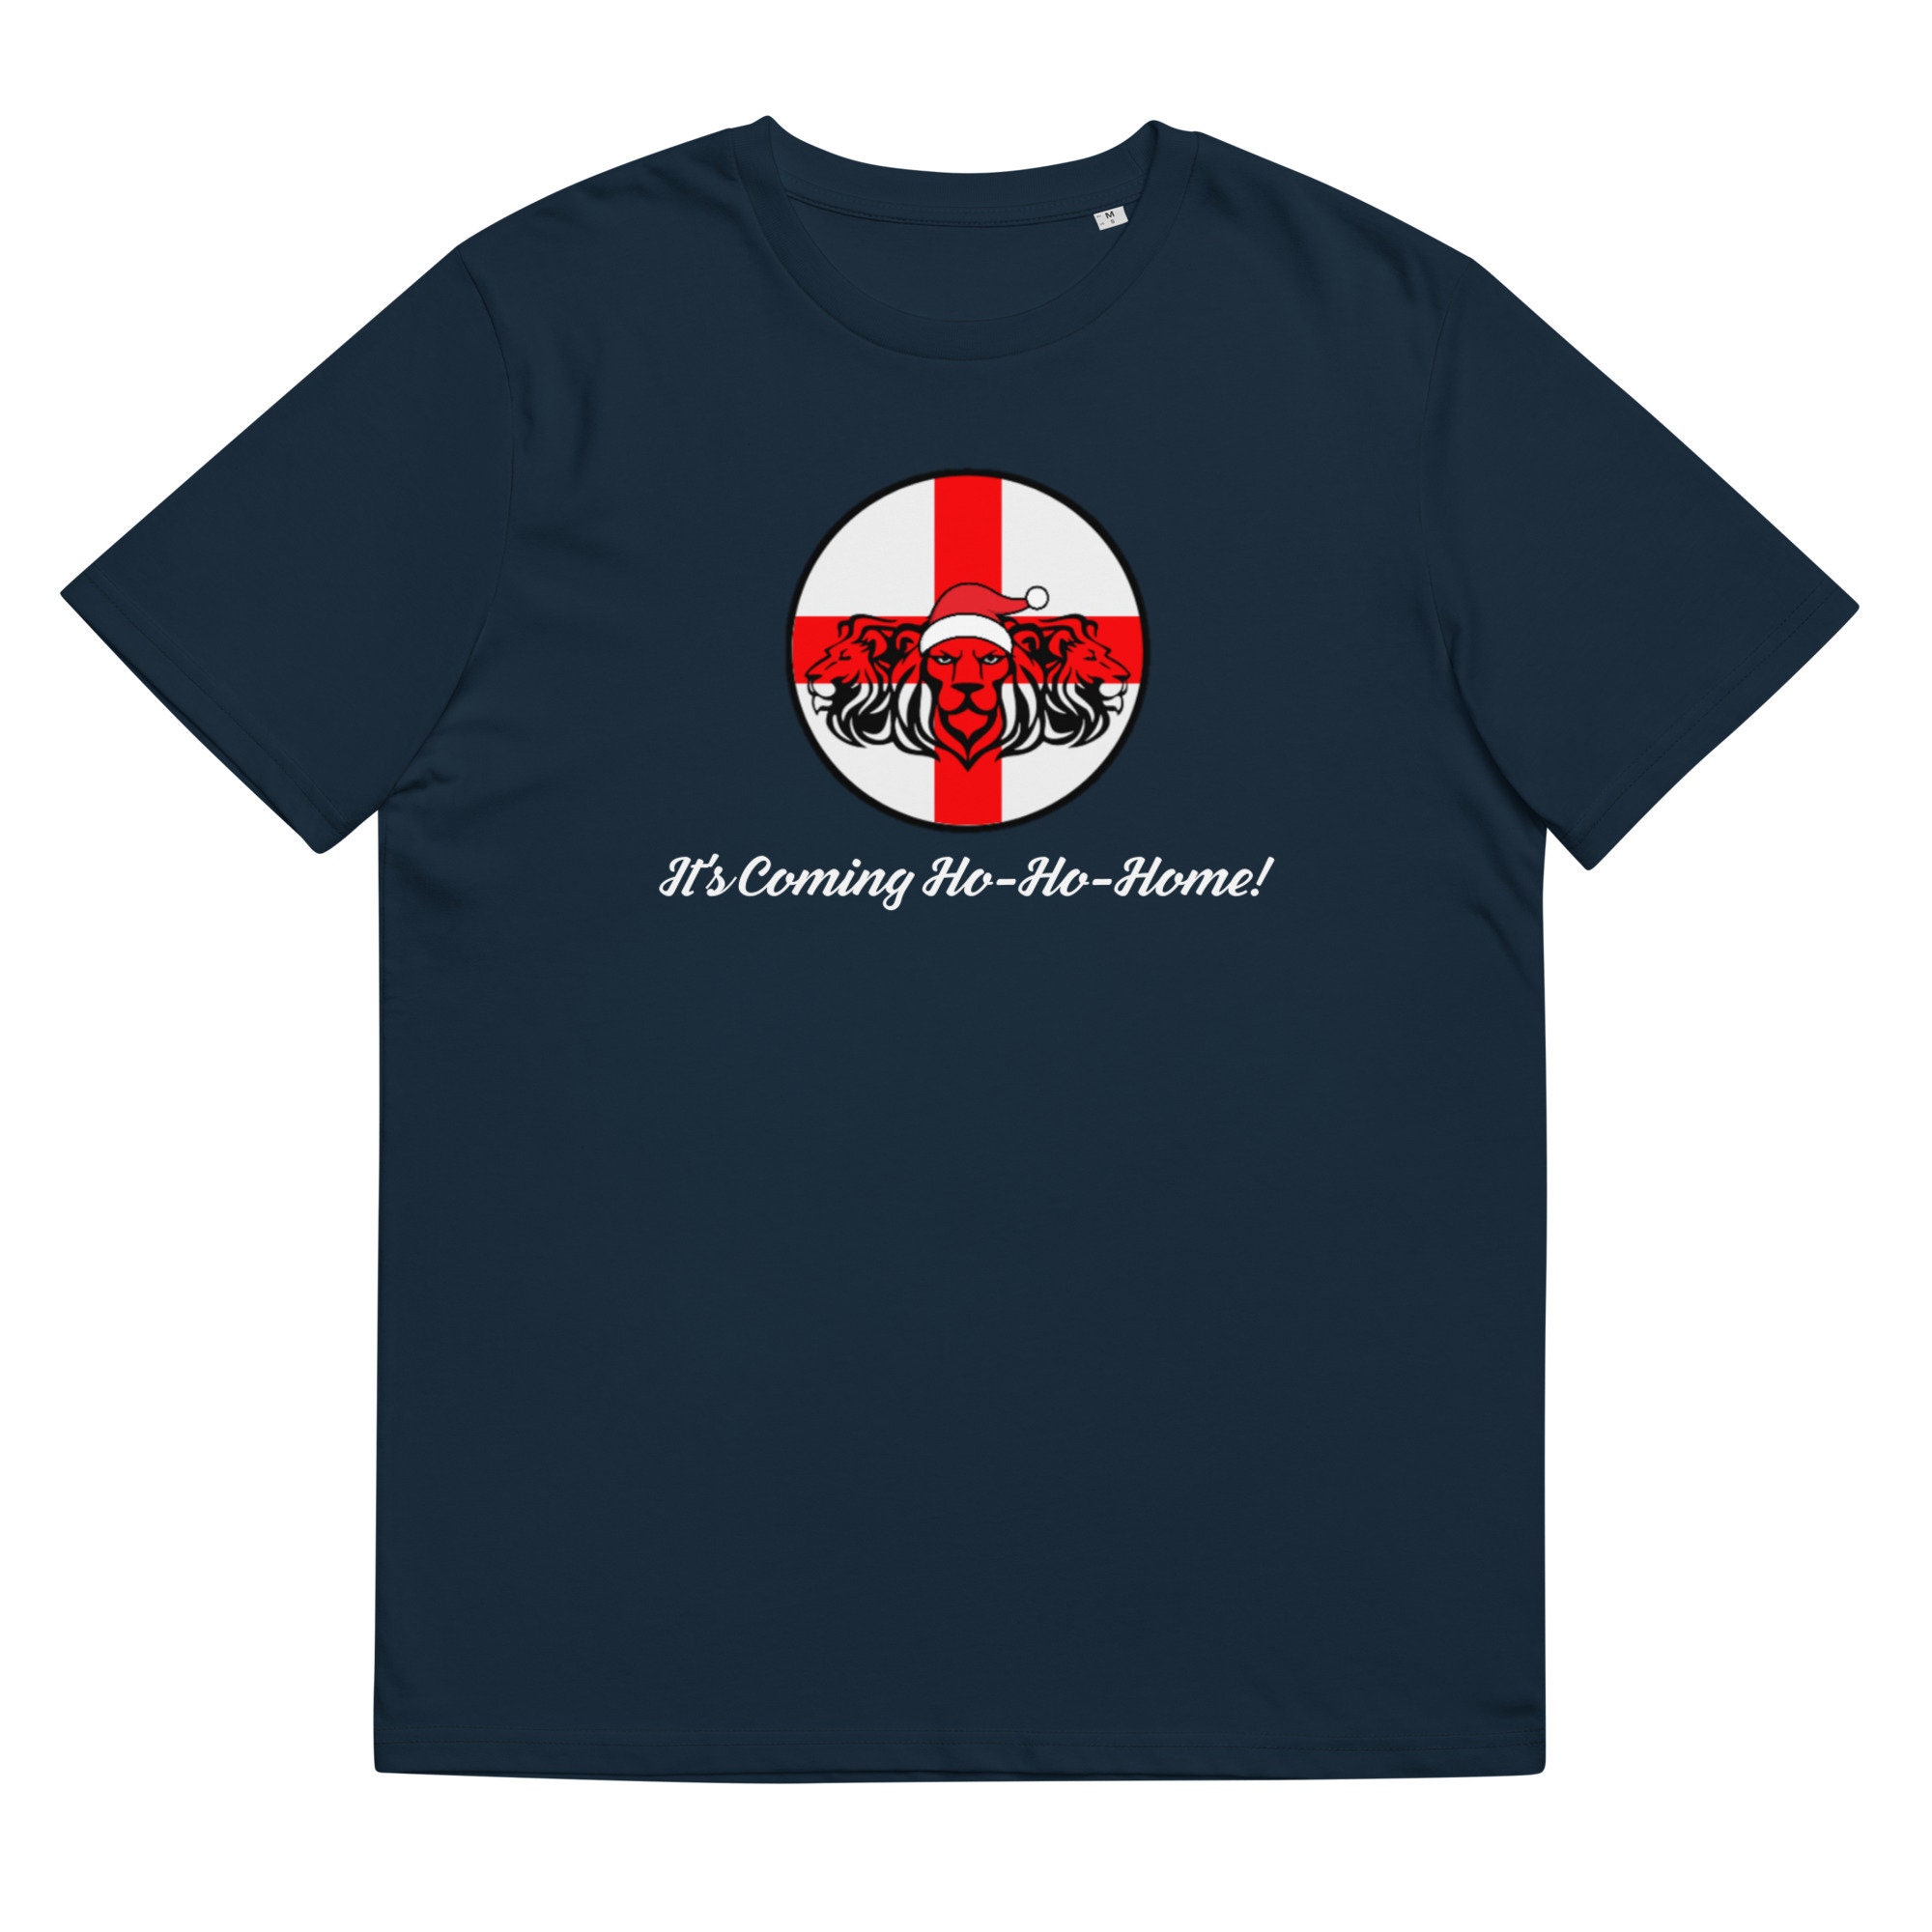 Discover It's Coming Ho-Ho-Home Tee, England Football T-Shirt